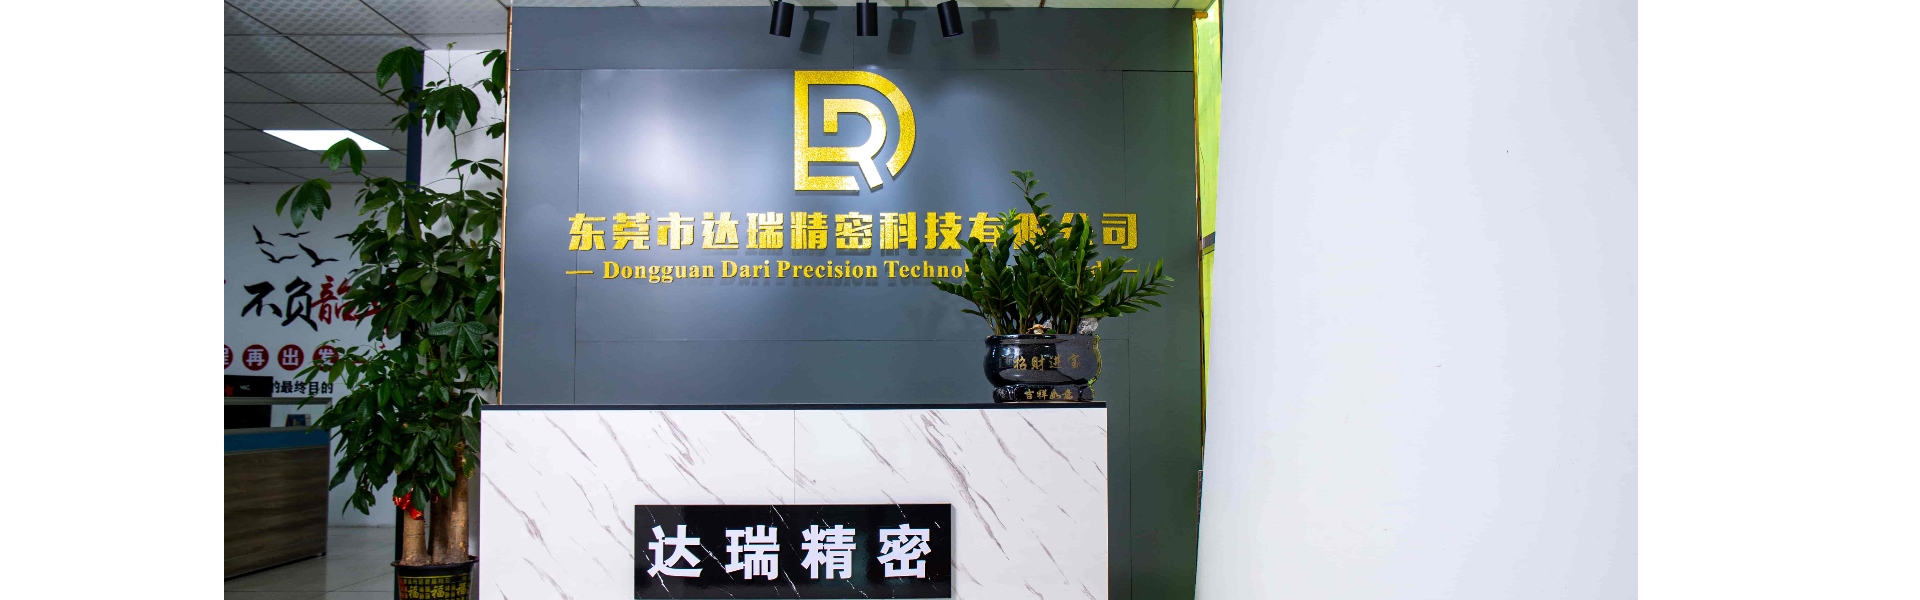 Plastform, formsprutning, plastskal,Dongguan Darui Precision Technology Co., Ltd.